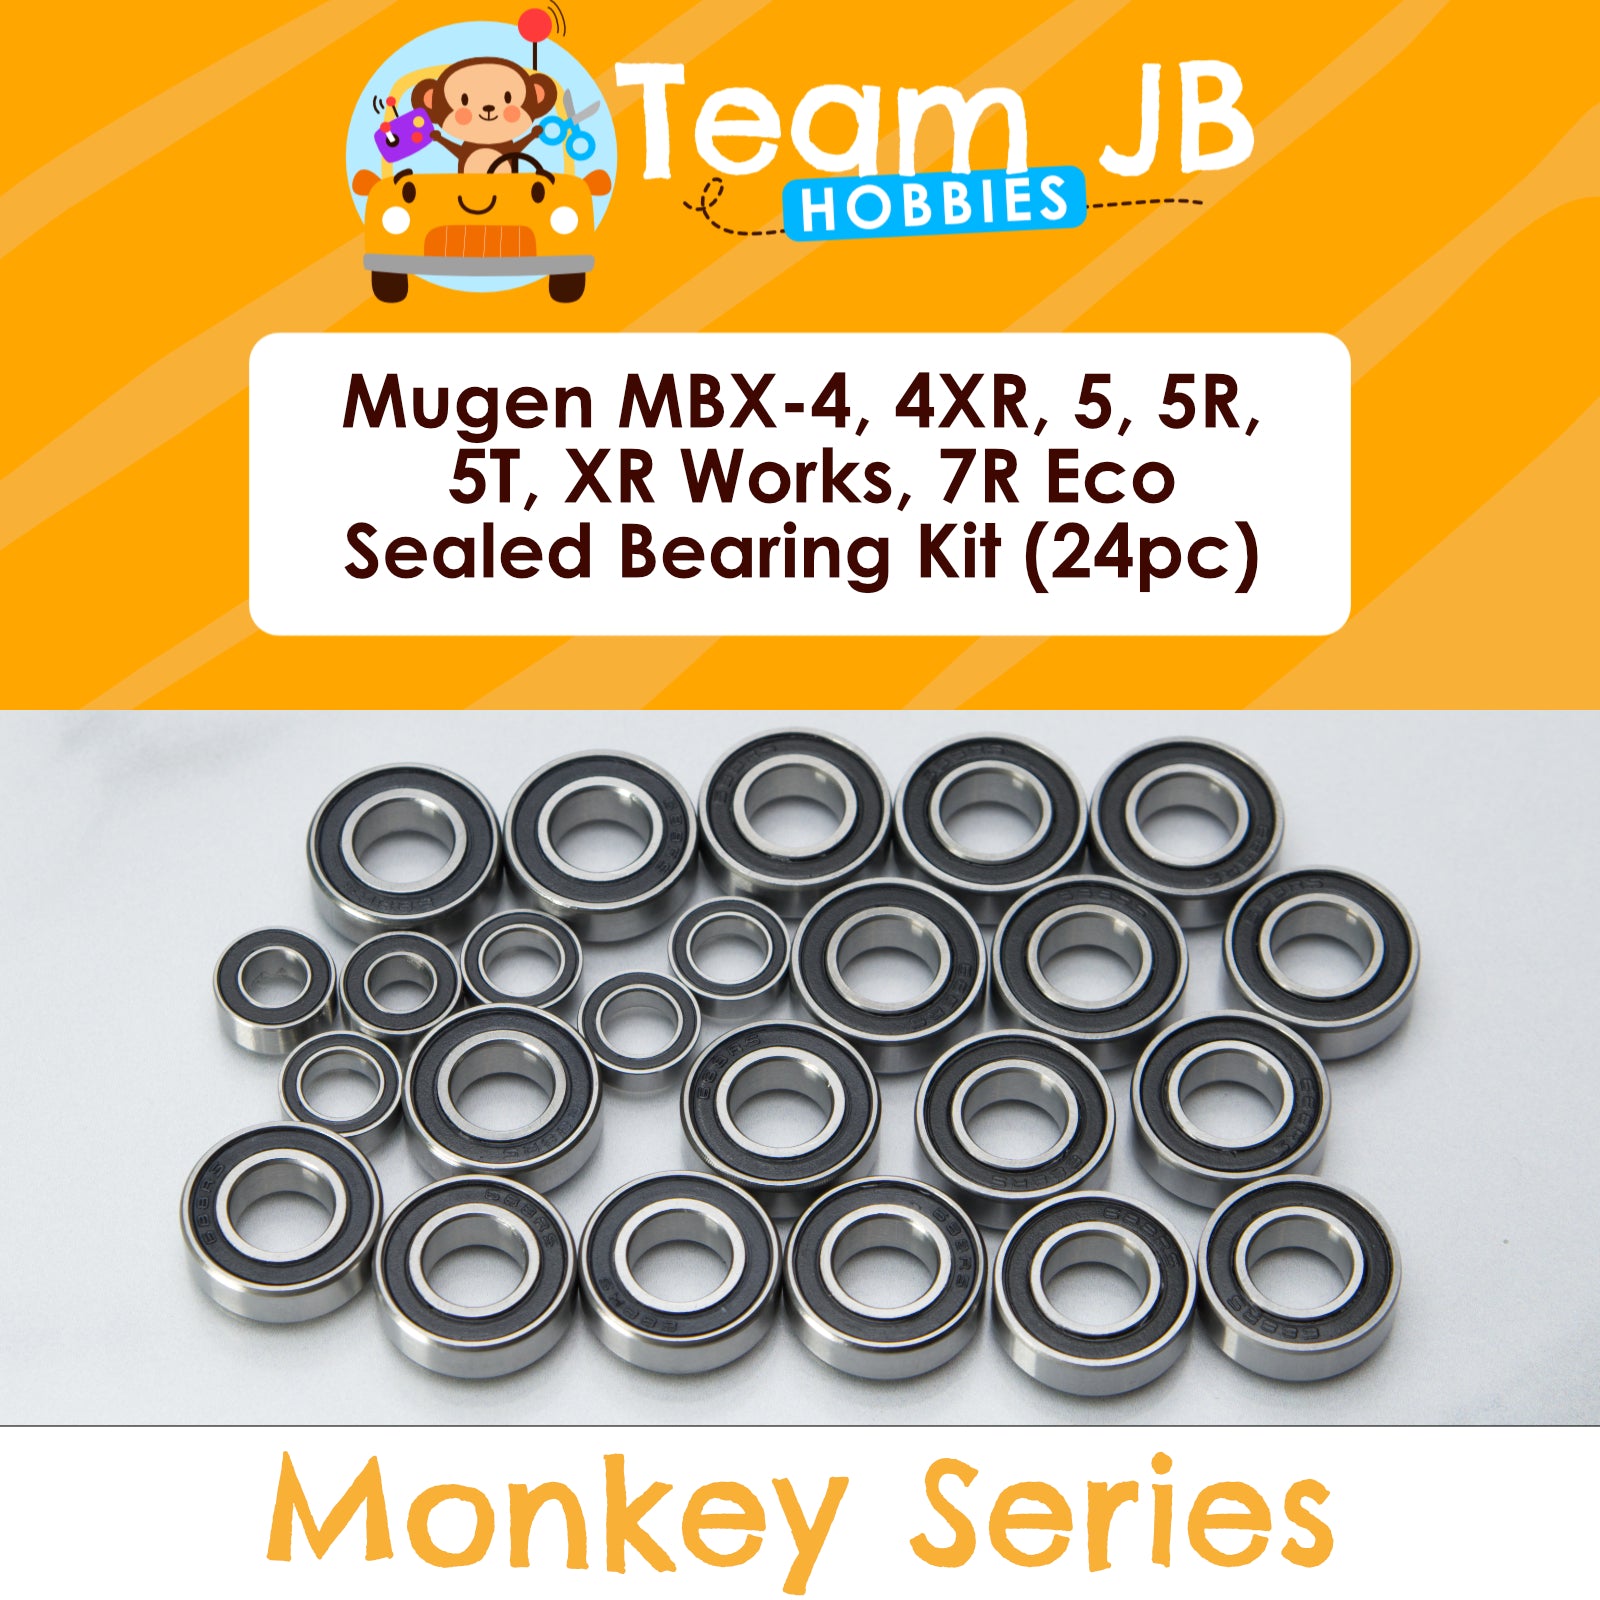 Mugen MBX-4, MBX-4XR, MBX-5 Prospect, MBX-5, MBX-5R Buggy, MBX-5T, MBX-XR Works, Mugen MBX-7R Eco - Sealed Bearing Kit